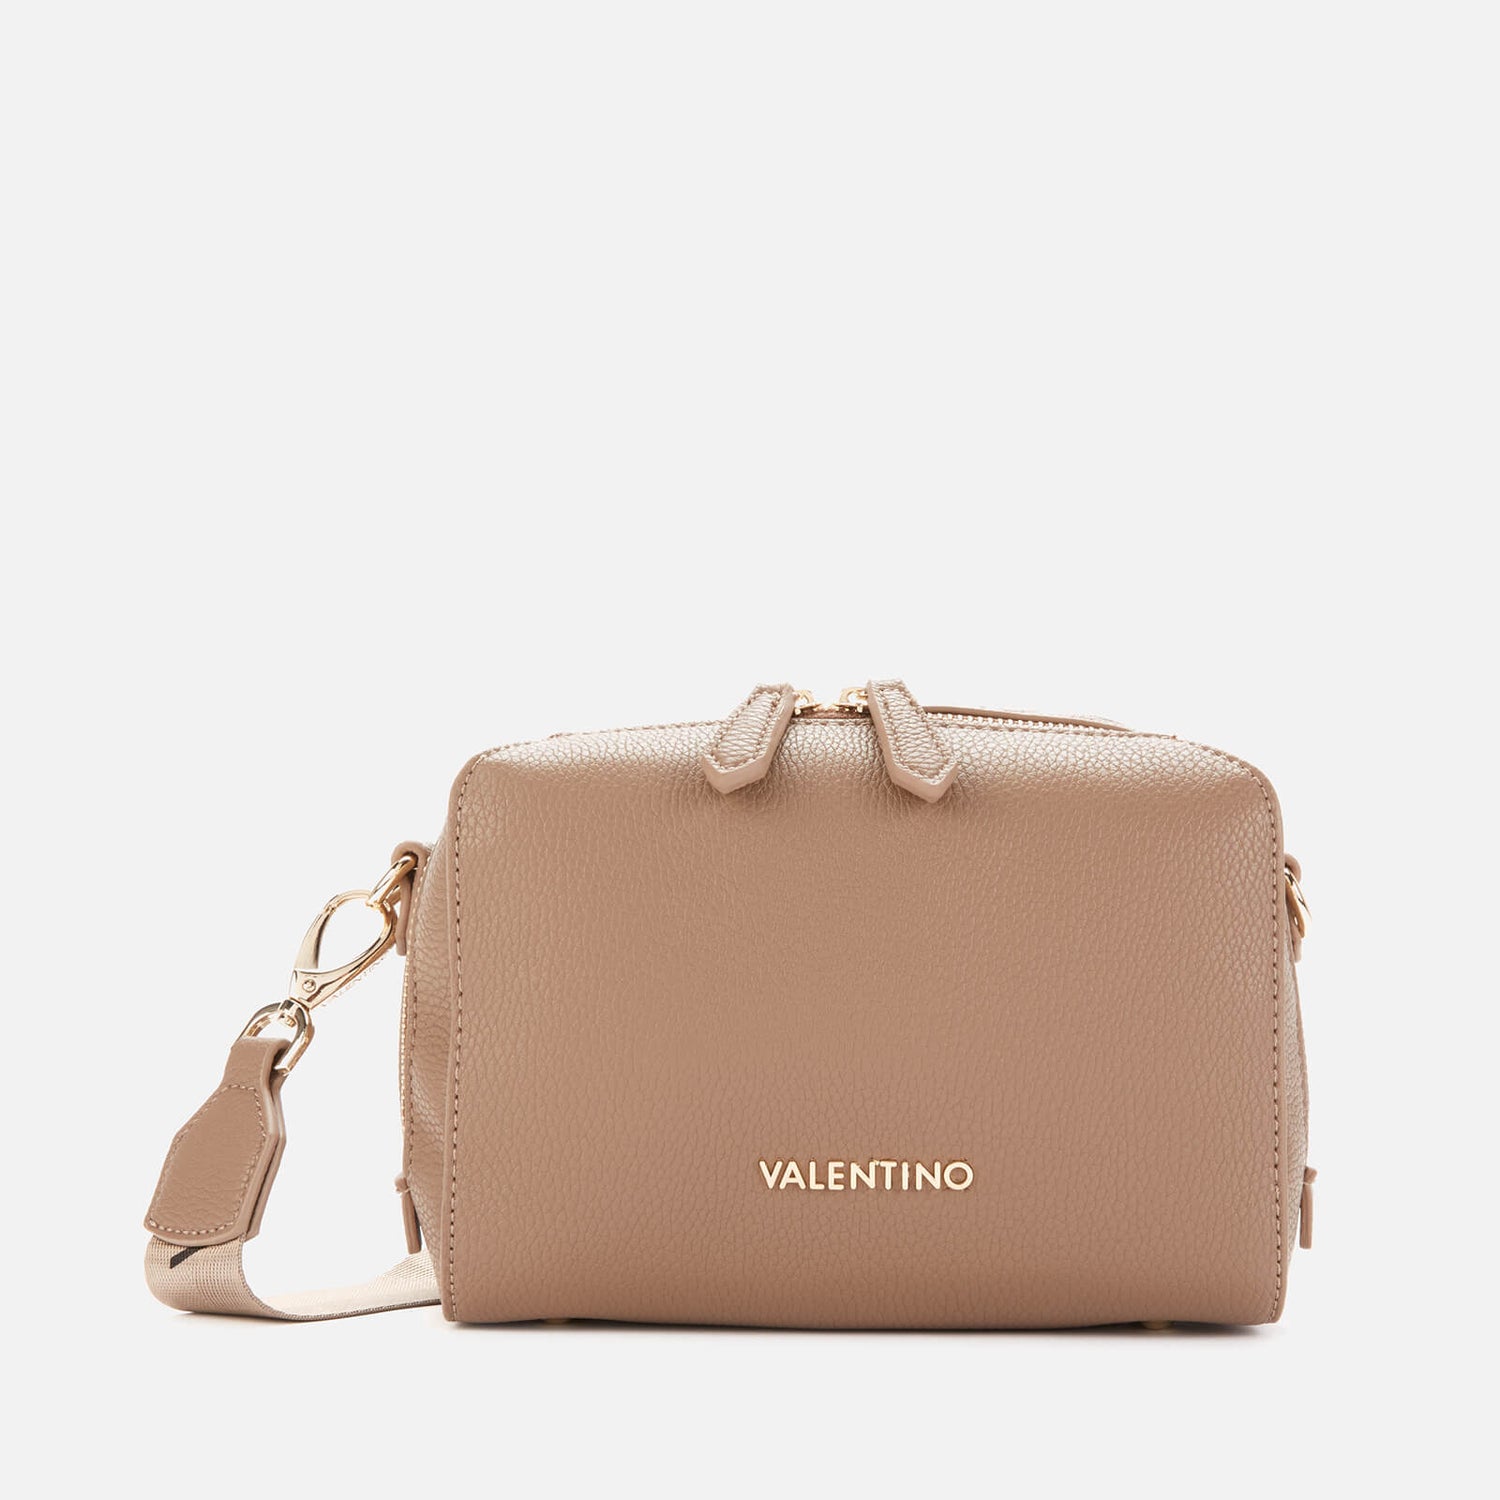 Valentino Bags Women's Pattie Cross Body Bag - Taupe